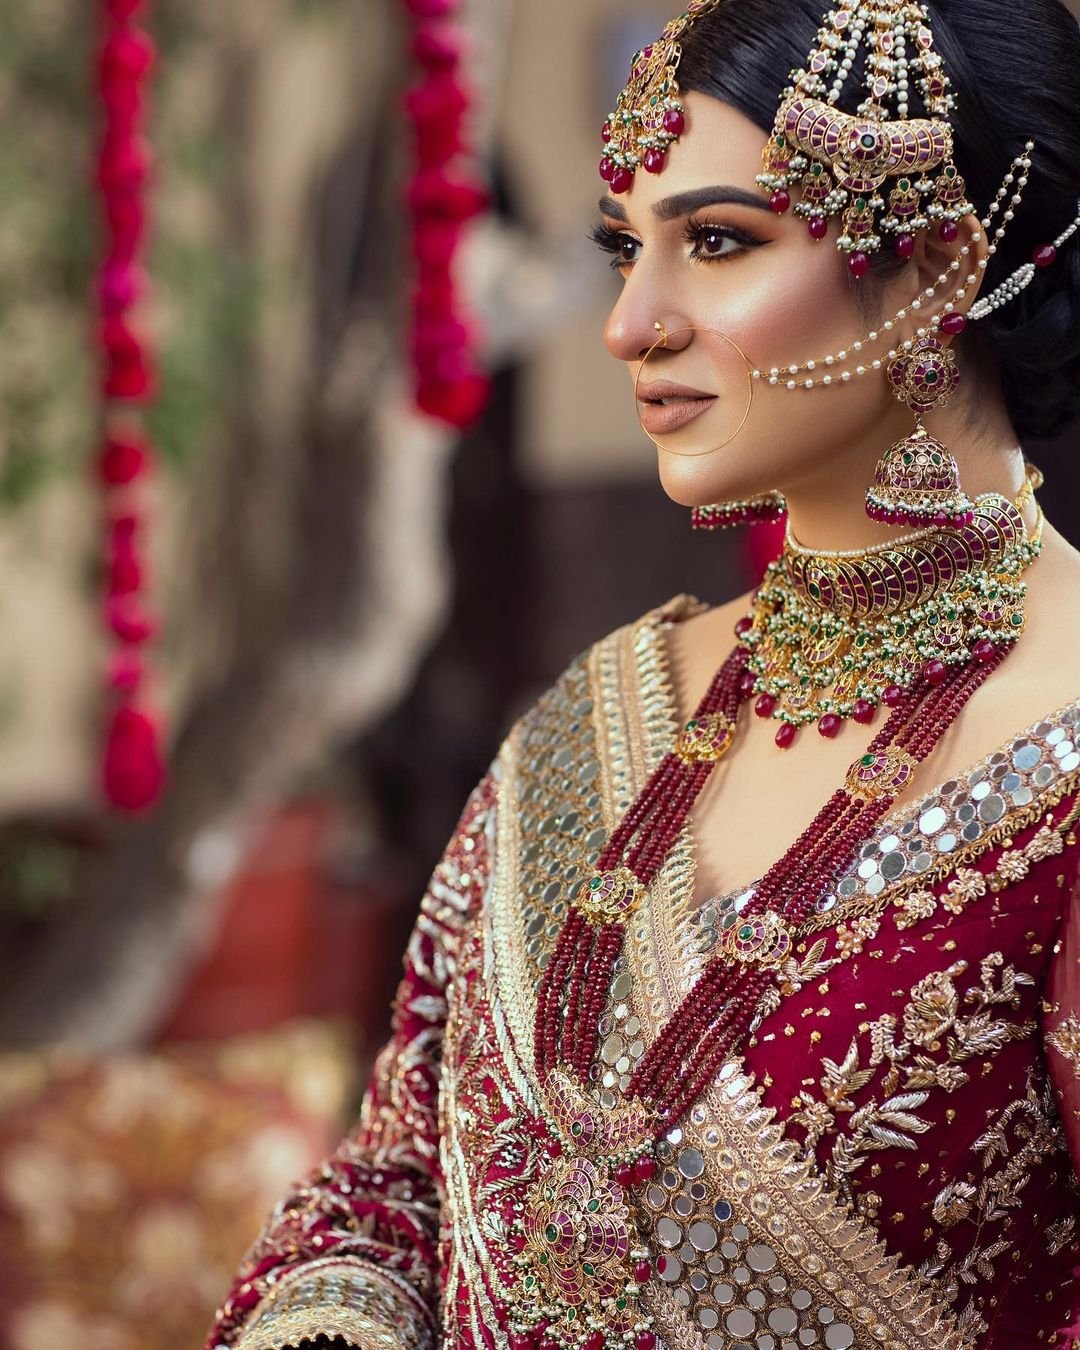 Sarah Khan stunts in New Bridal Photoshoot